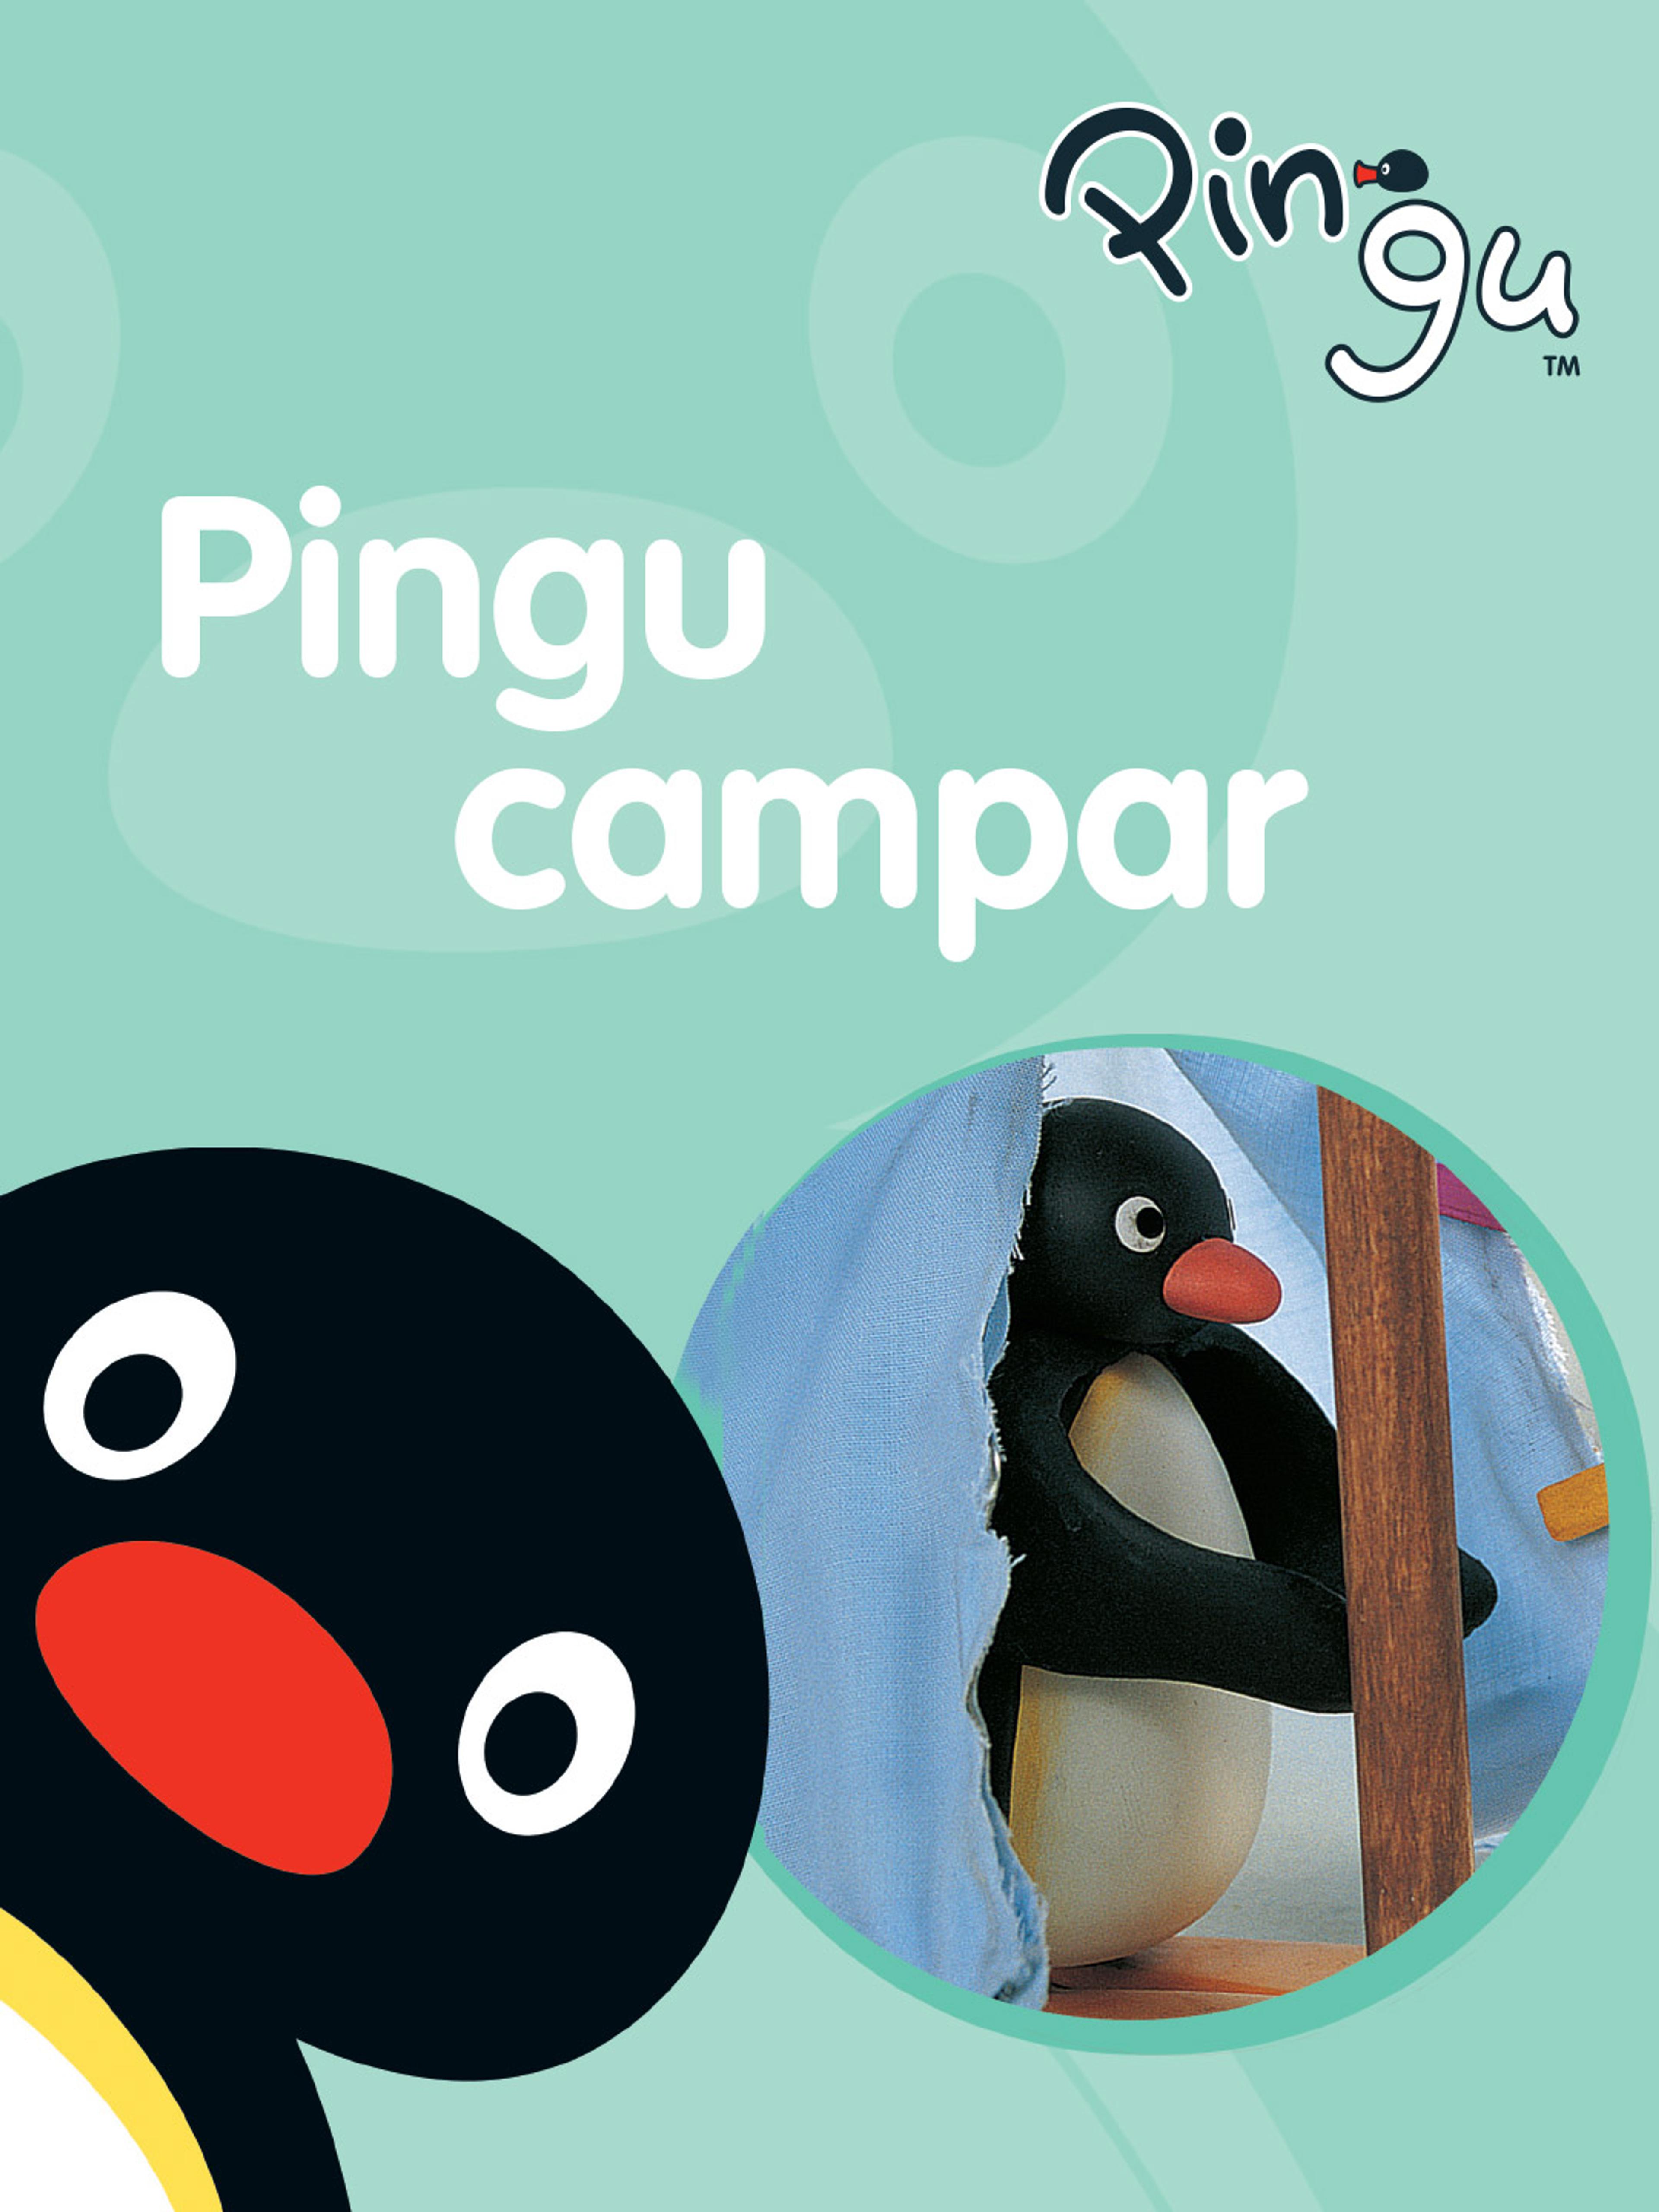 Pingu campar